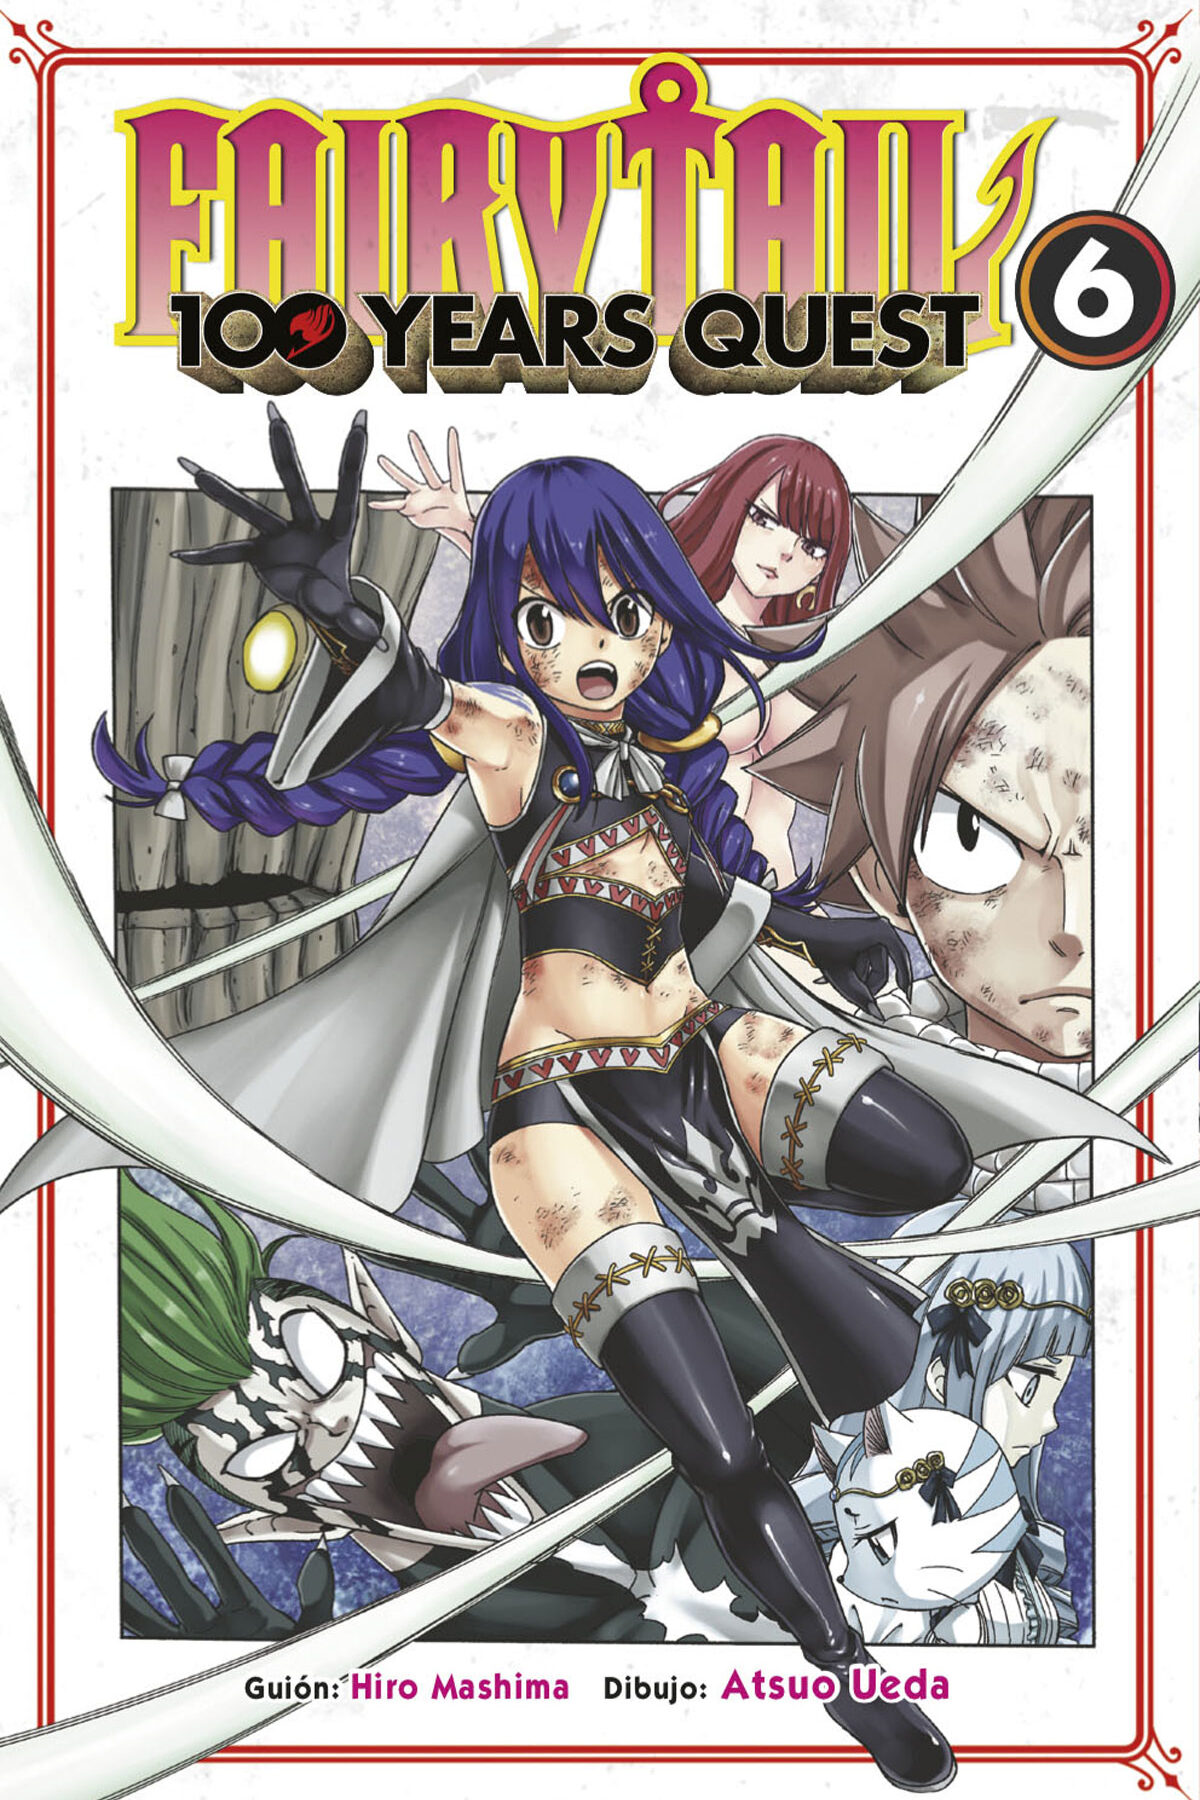 Manga Fairy Tail 100 Years Quest 6